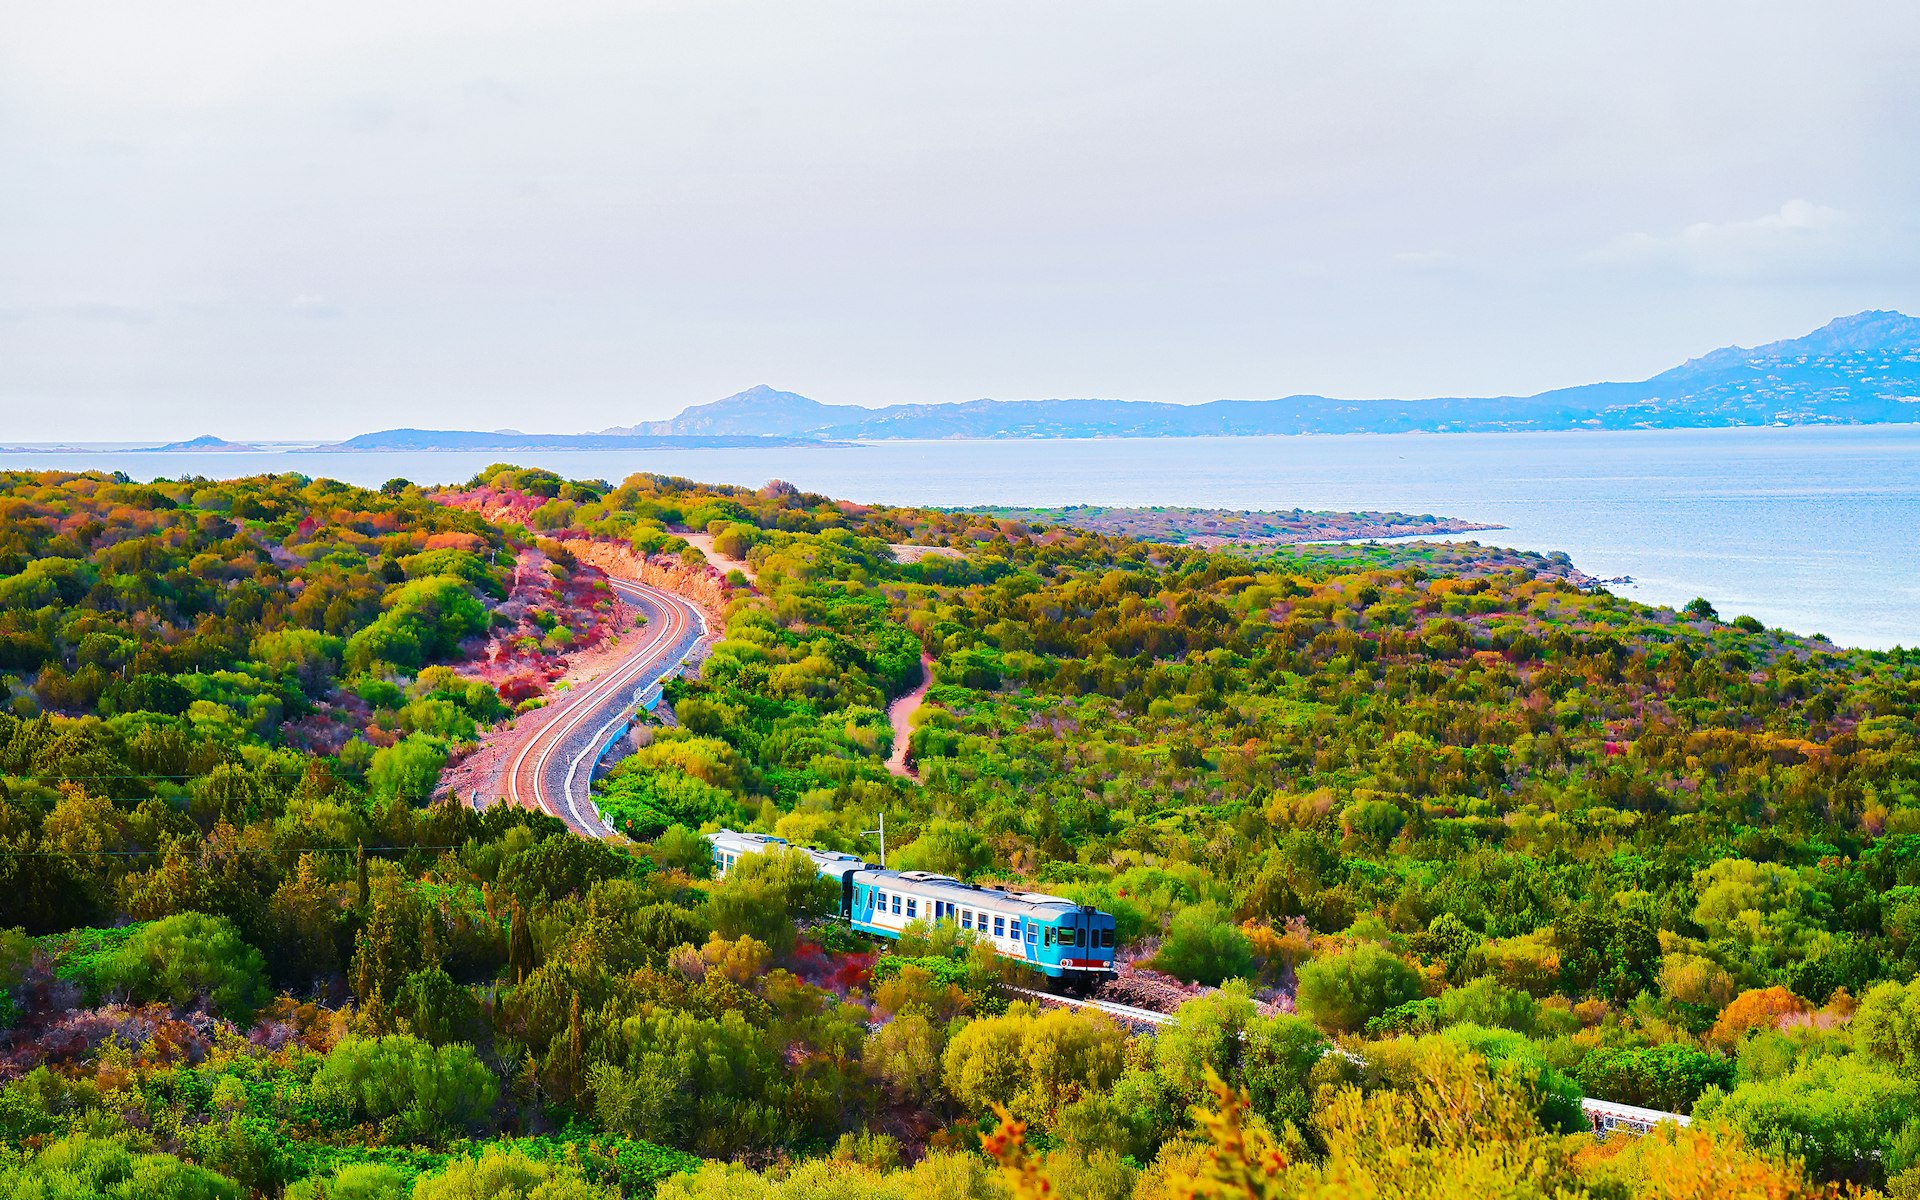 Train at Golfo Aranci in Costa Smeralda resort, Sardinia, Italy. Olbia province. Landscape with Sardinian green forest and Mediterranean sea on background.